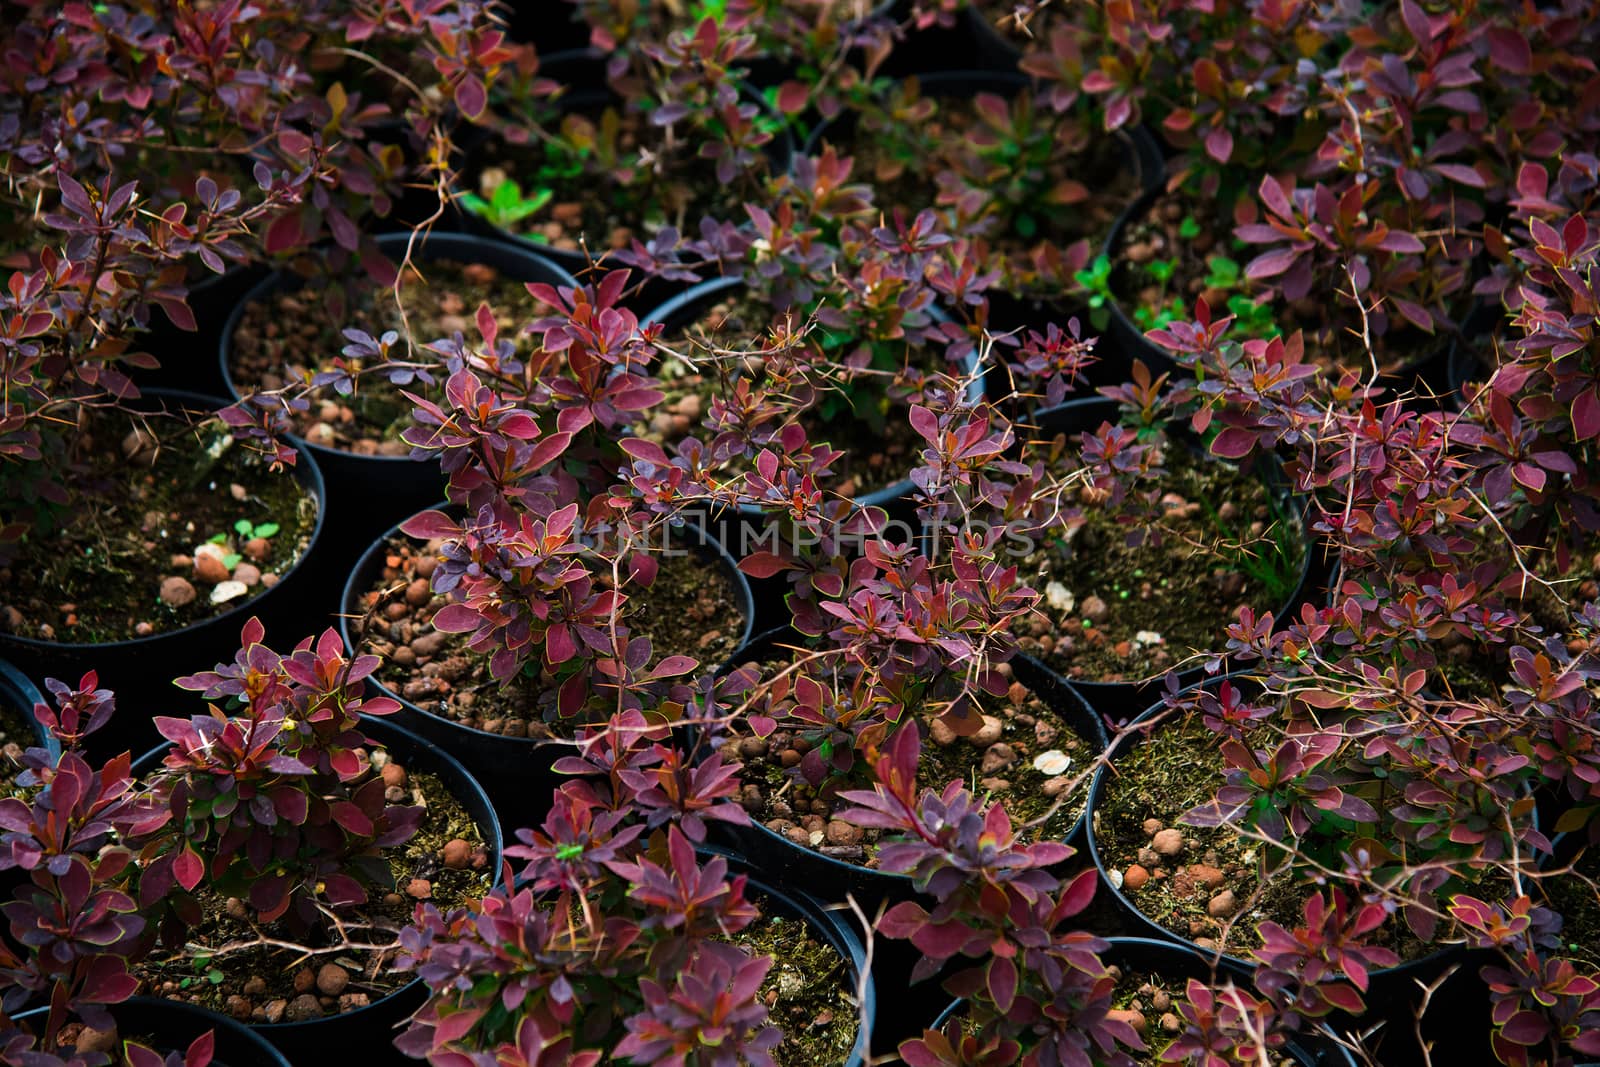 Saplings barberry shrubs in pots in plant nursery by grigorenko